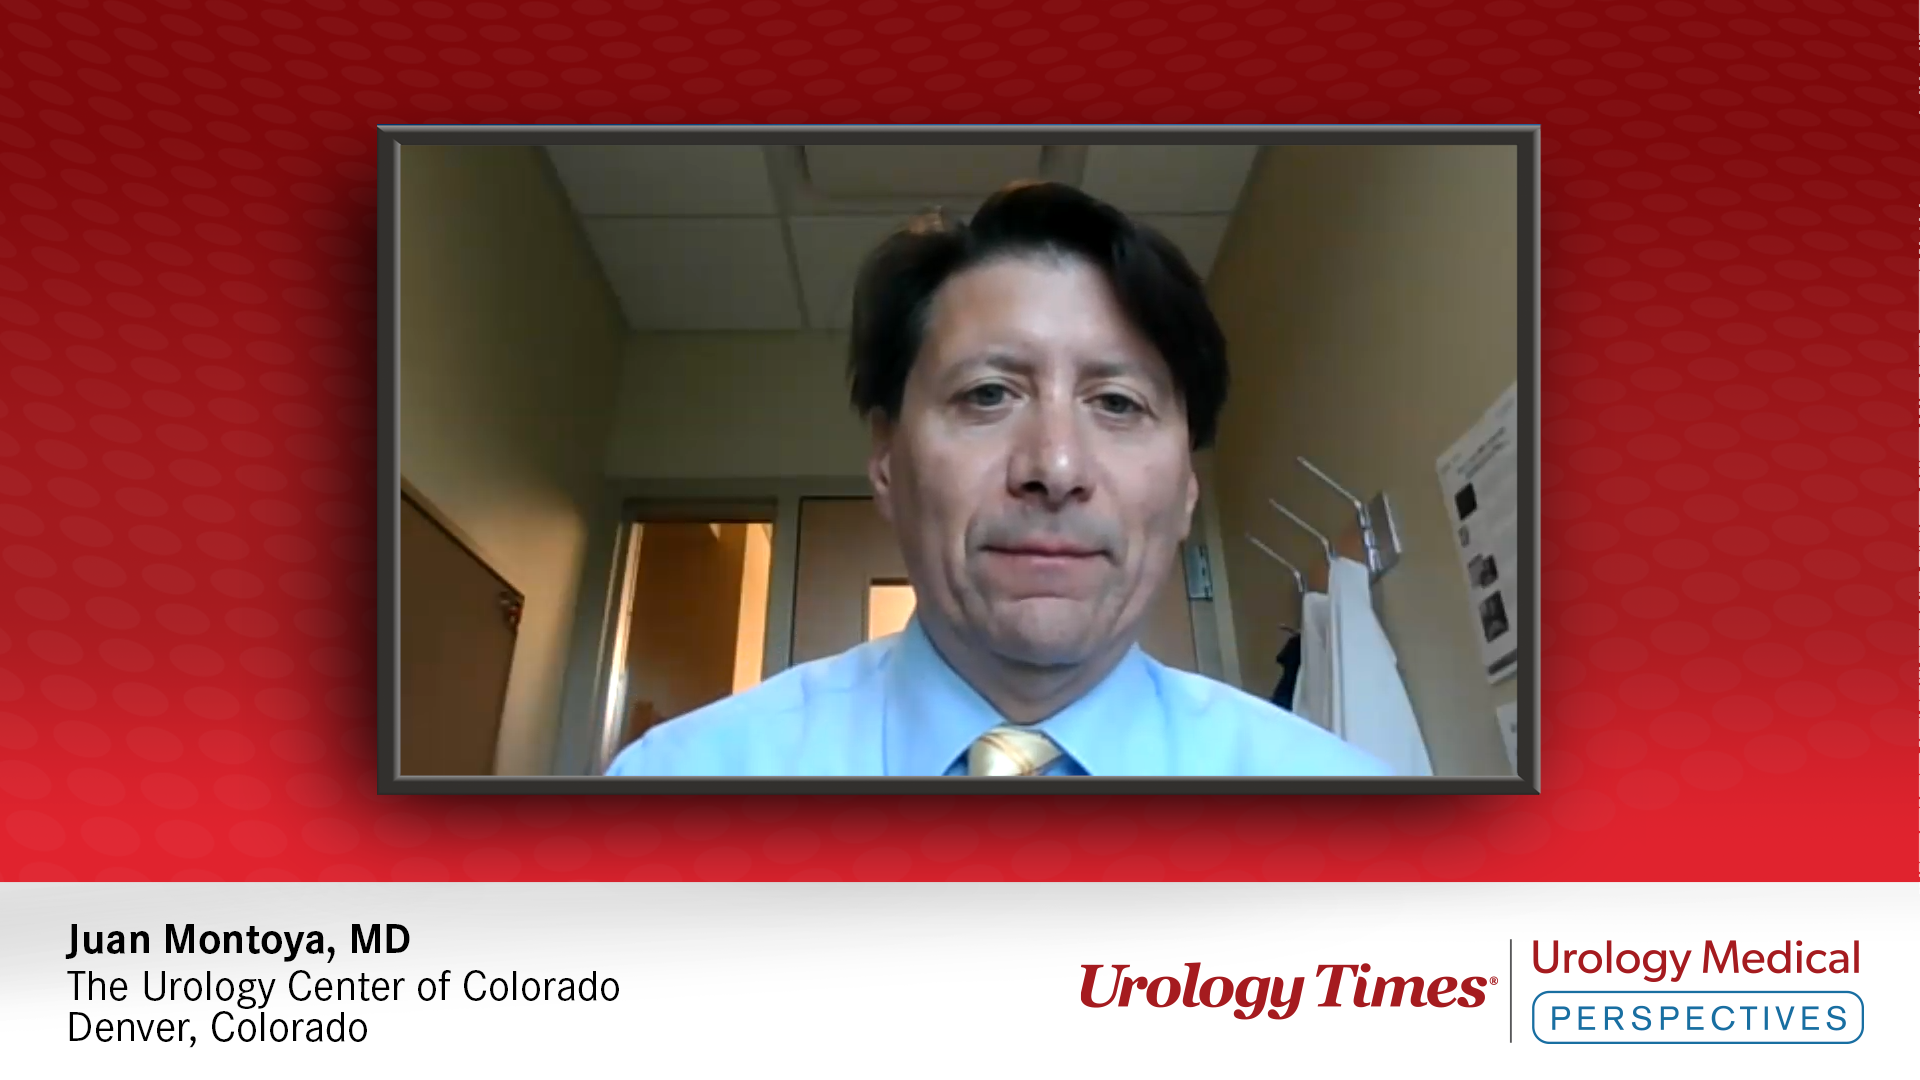 Juan Montoya, MD, an expert on prostate cancer